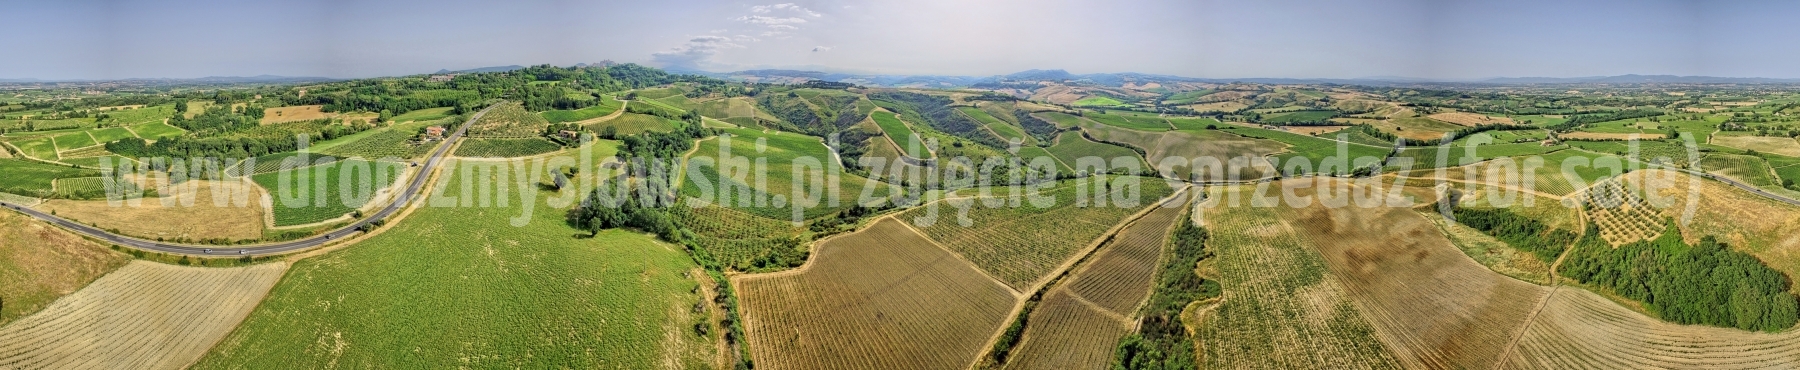 02-lot-dronem-we-Wloszech-w-okolicach-Montepulciano_002_HDR_panorama